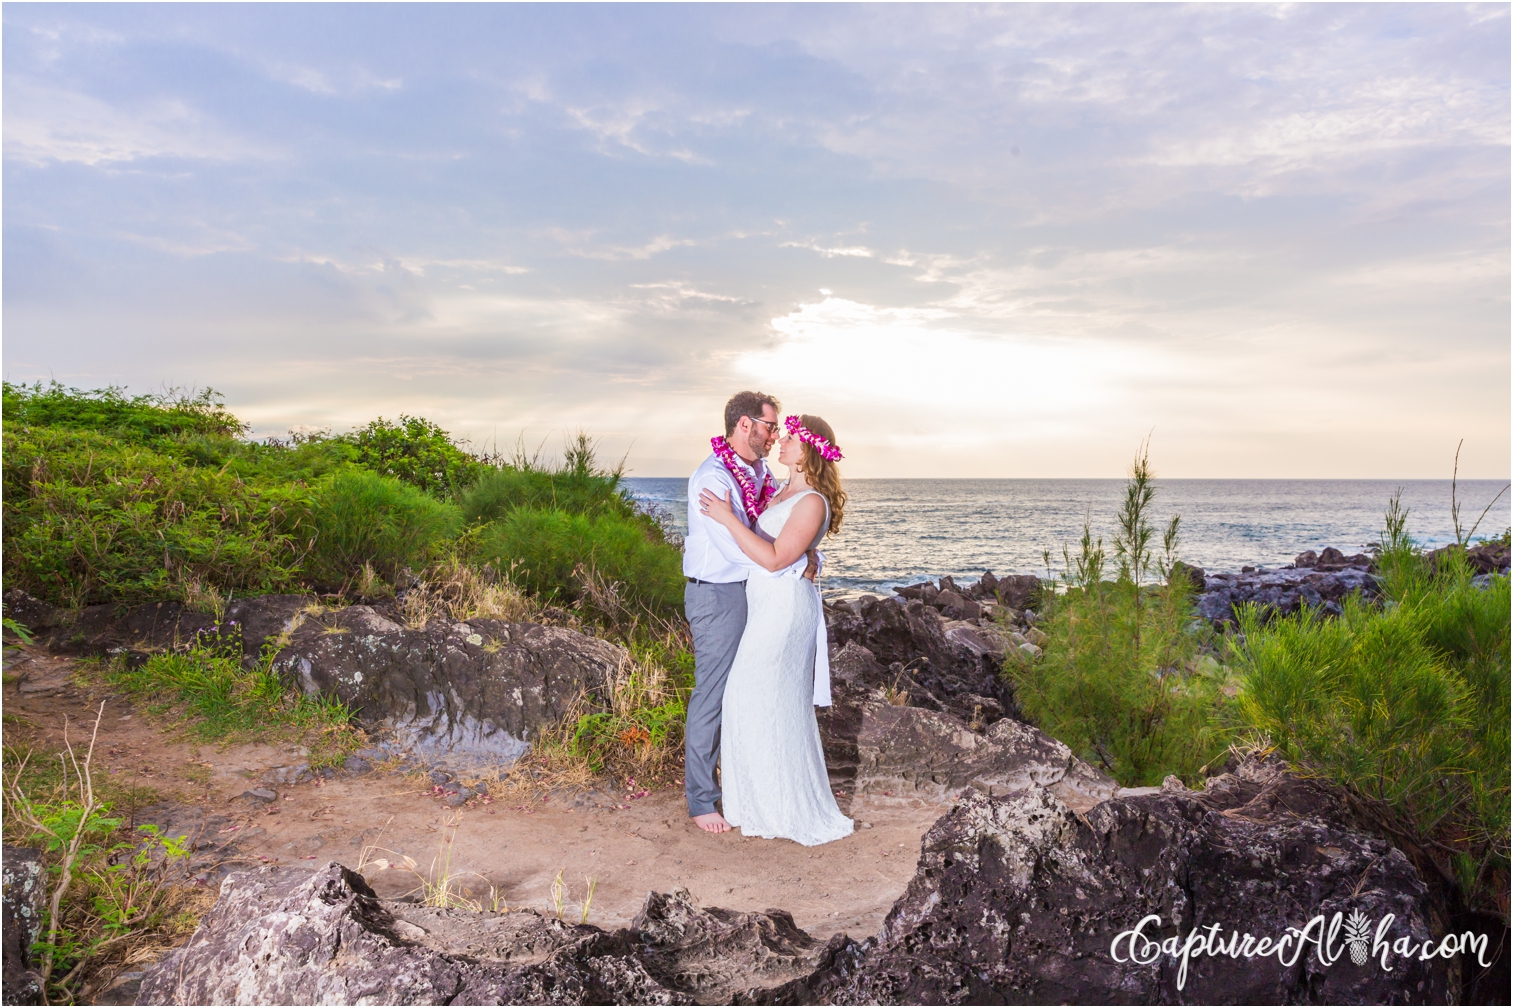 Honeymoon Photography In Maui